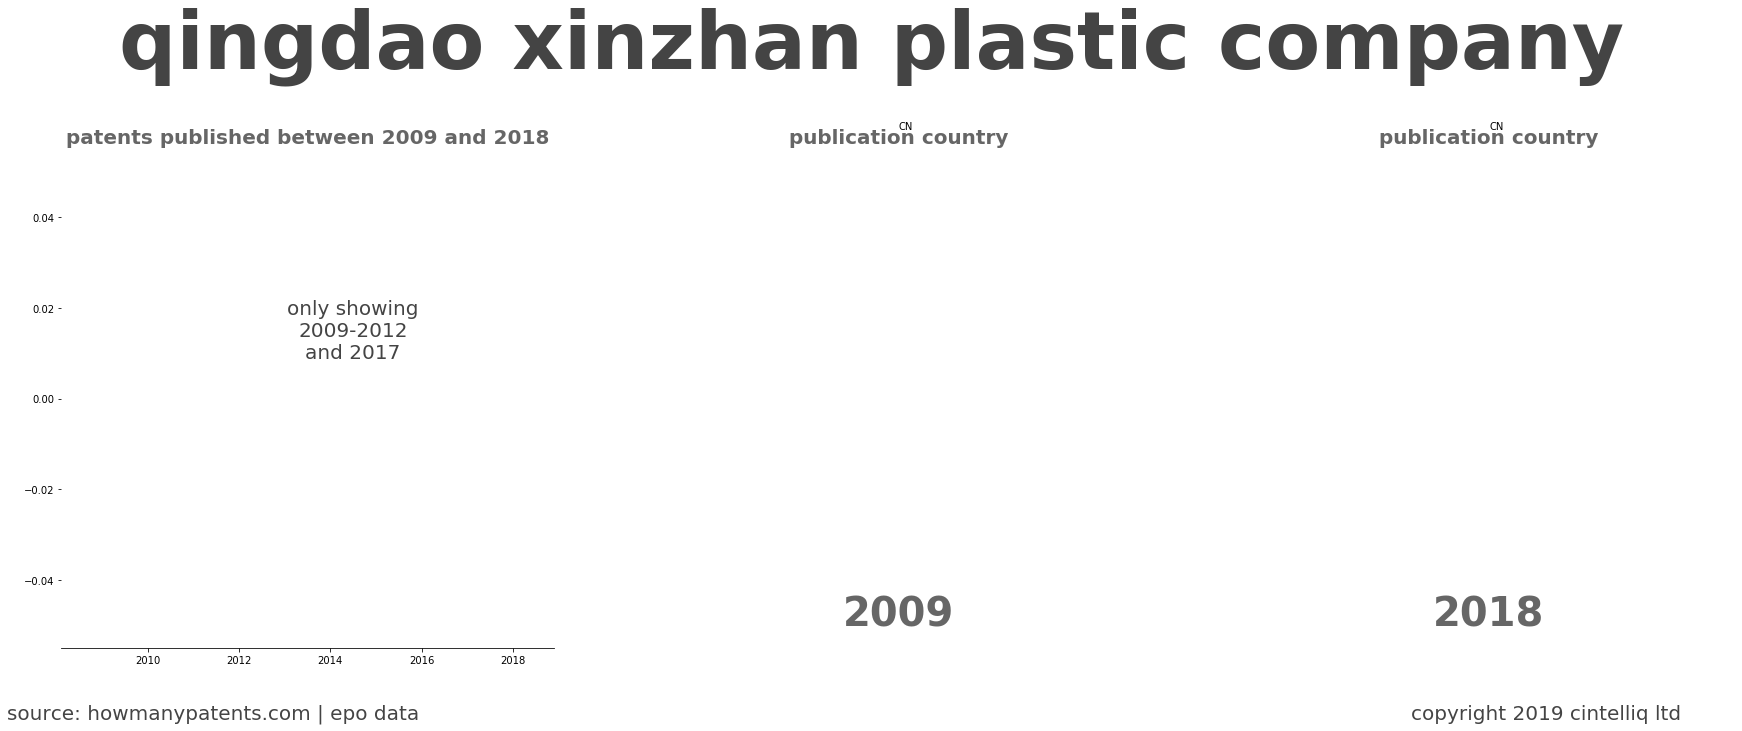 summary of patents for Qingdao Xinzhan Plastic Company